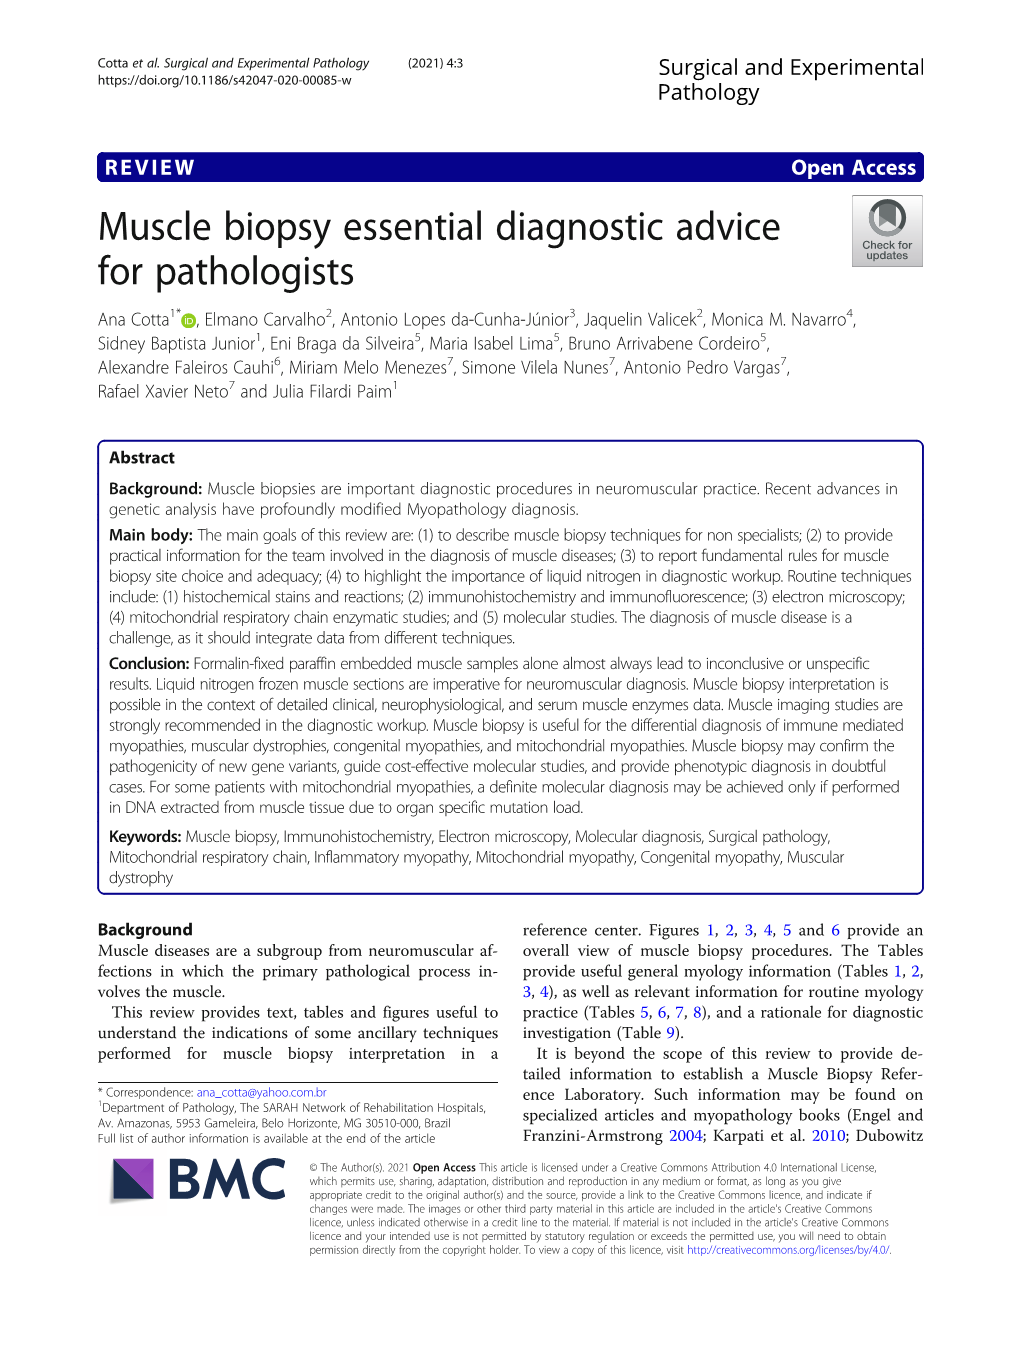 Muscle Biopsy Essential Diagnostic Advice for Pathologists Ana Cotta1* , Elmano Carvalho2, Antonio Lopes Da-Cunha-Júnior3, Jaquelin Valicek2, Monica M